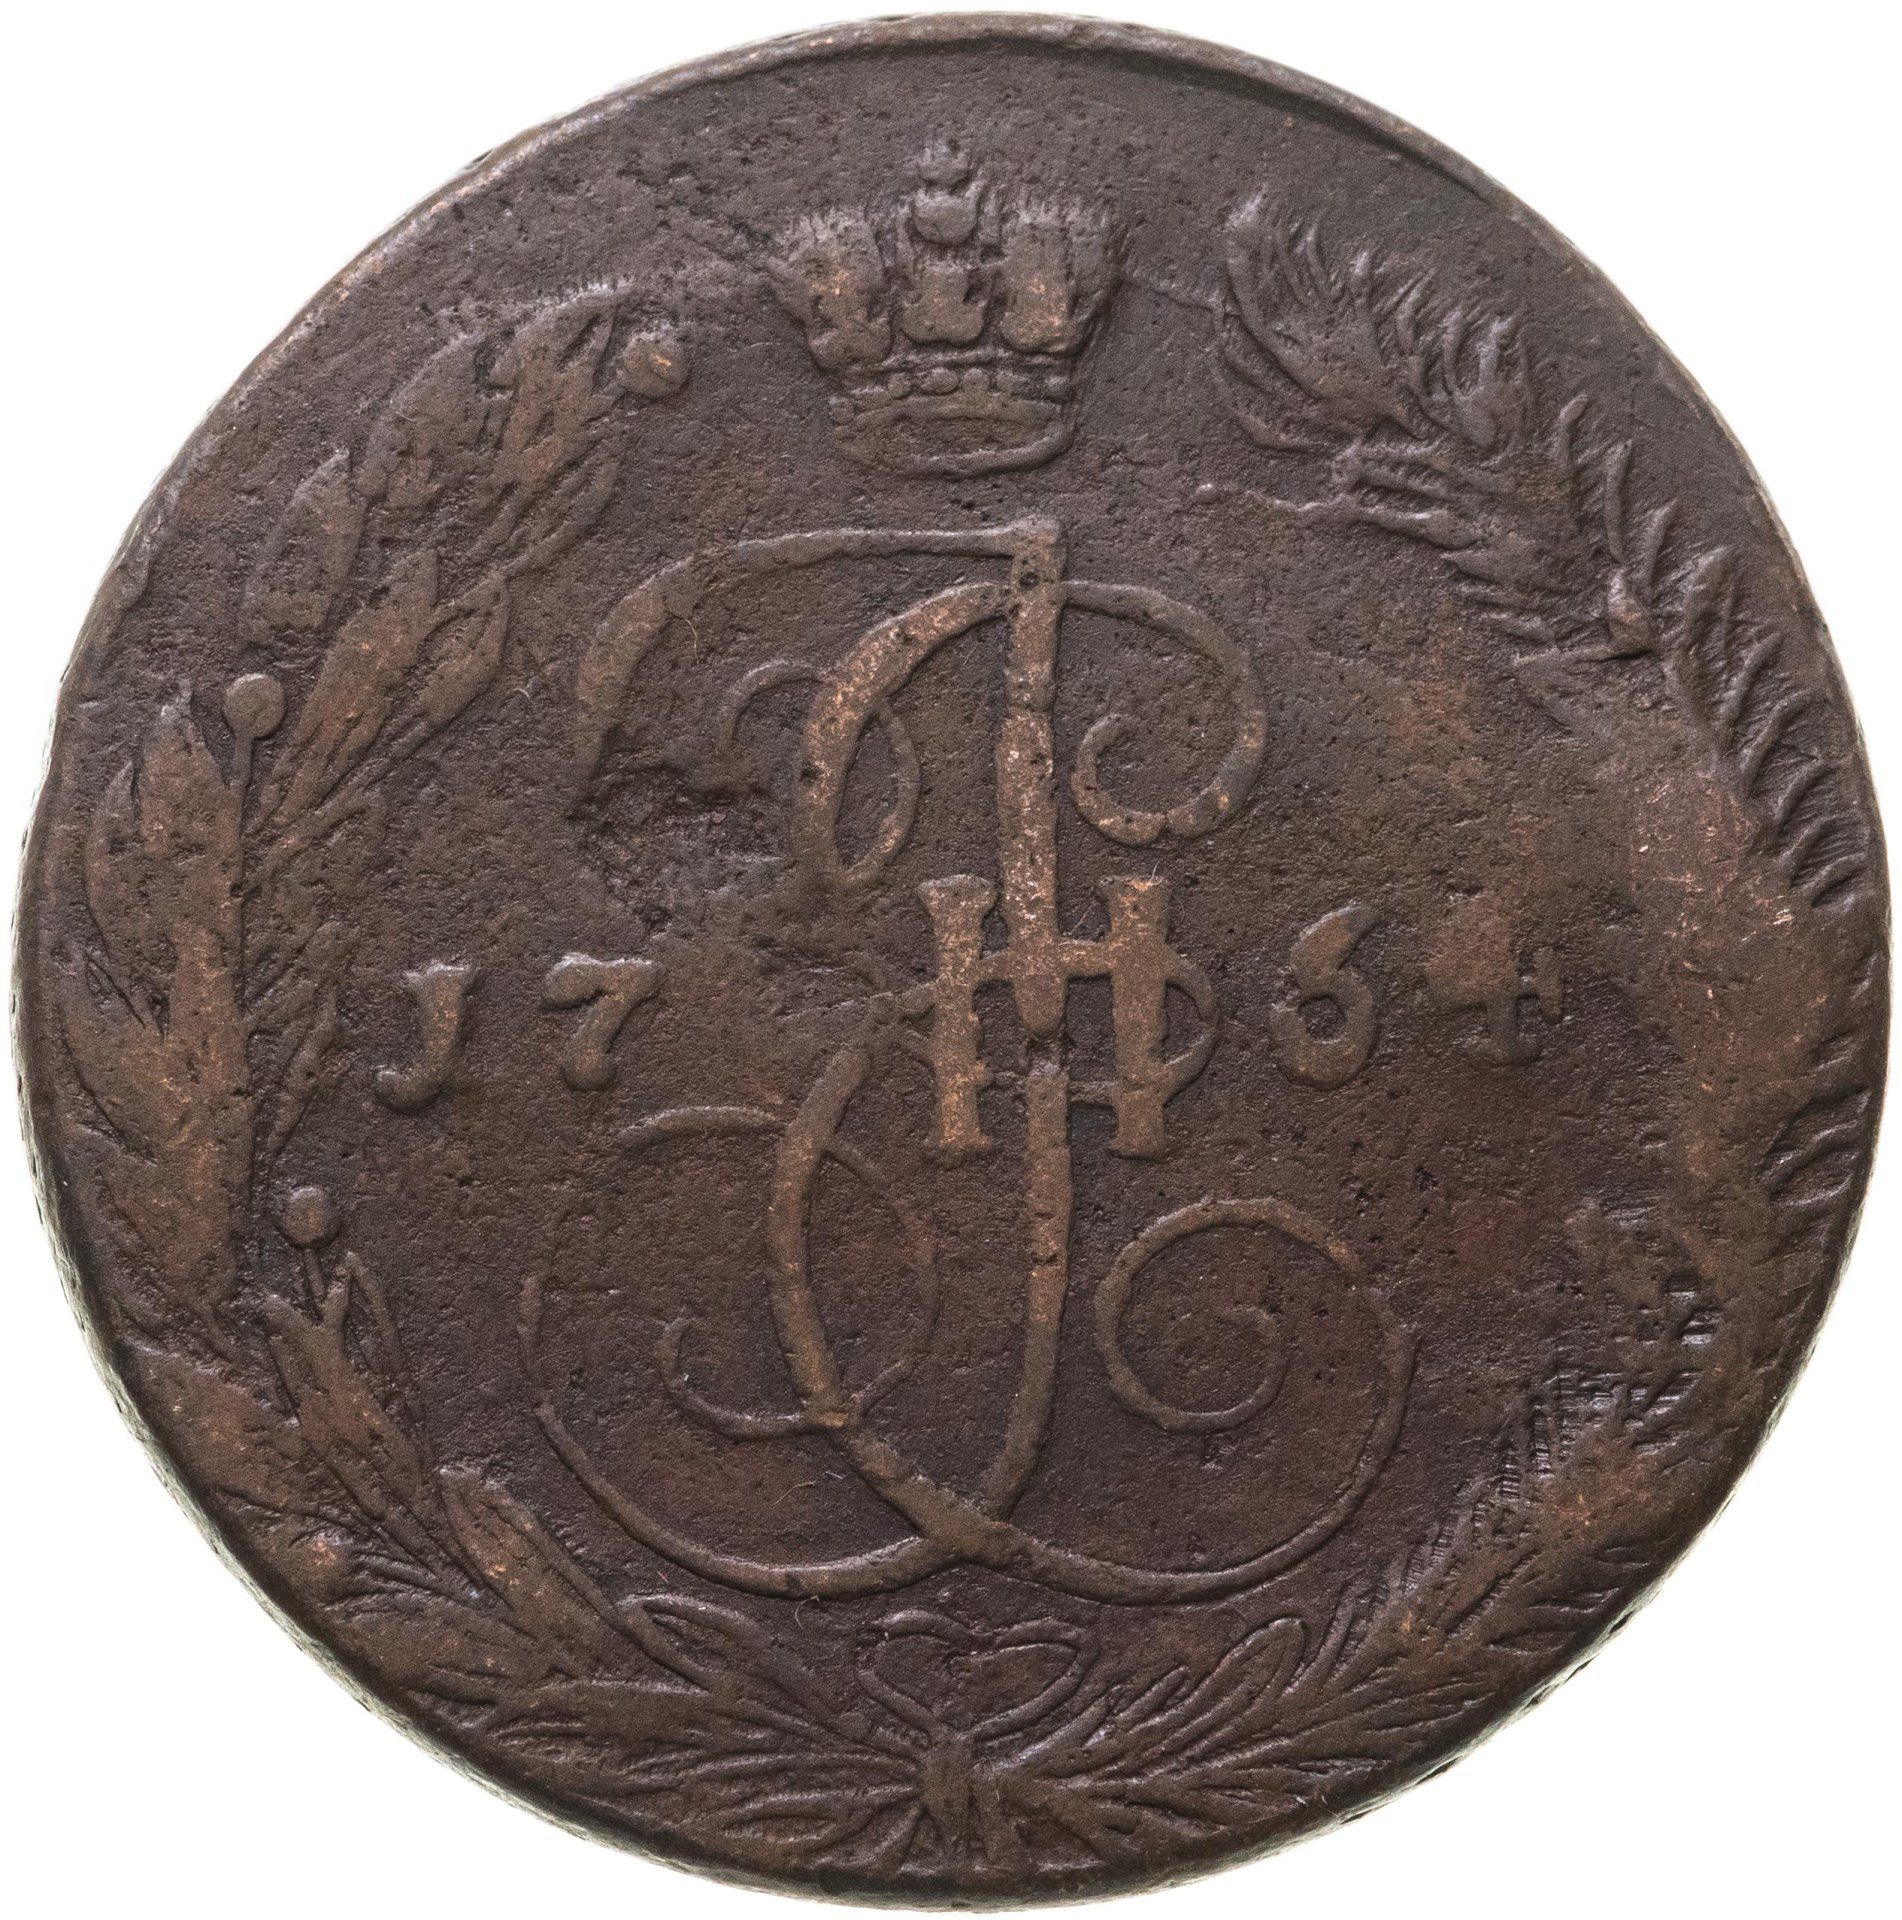 Монета екатерины 5 копеек. 1763 Монета Екатерины перечекан. Монета 5 копеек 1763 года. 5 Копеек 1768 серебро. Царская монета пять копеек 1768.